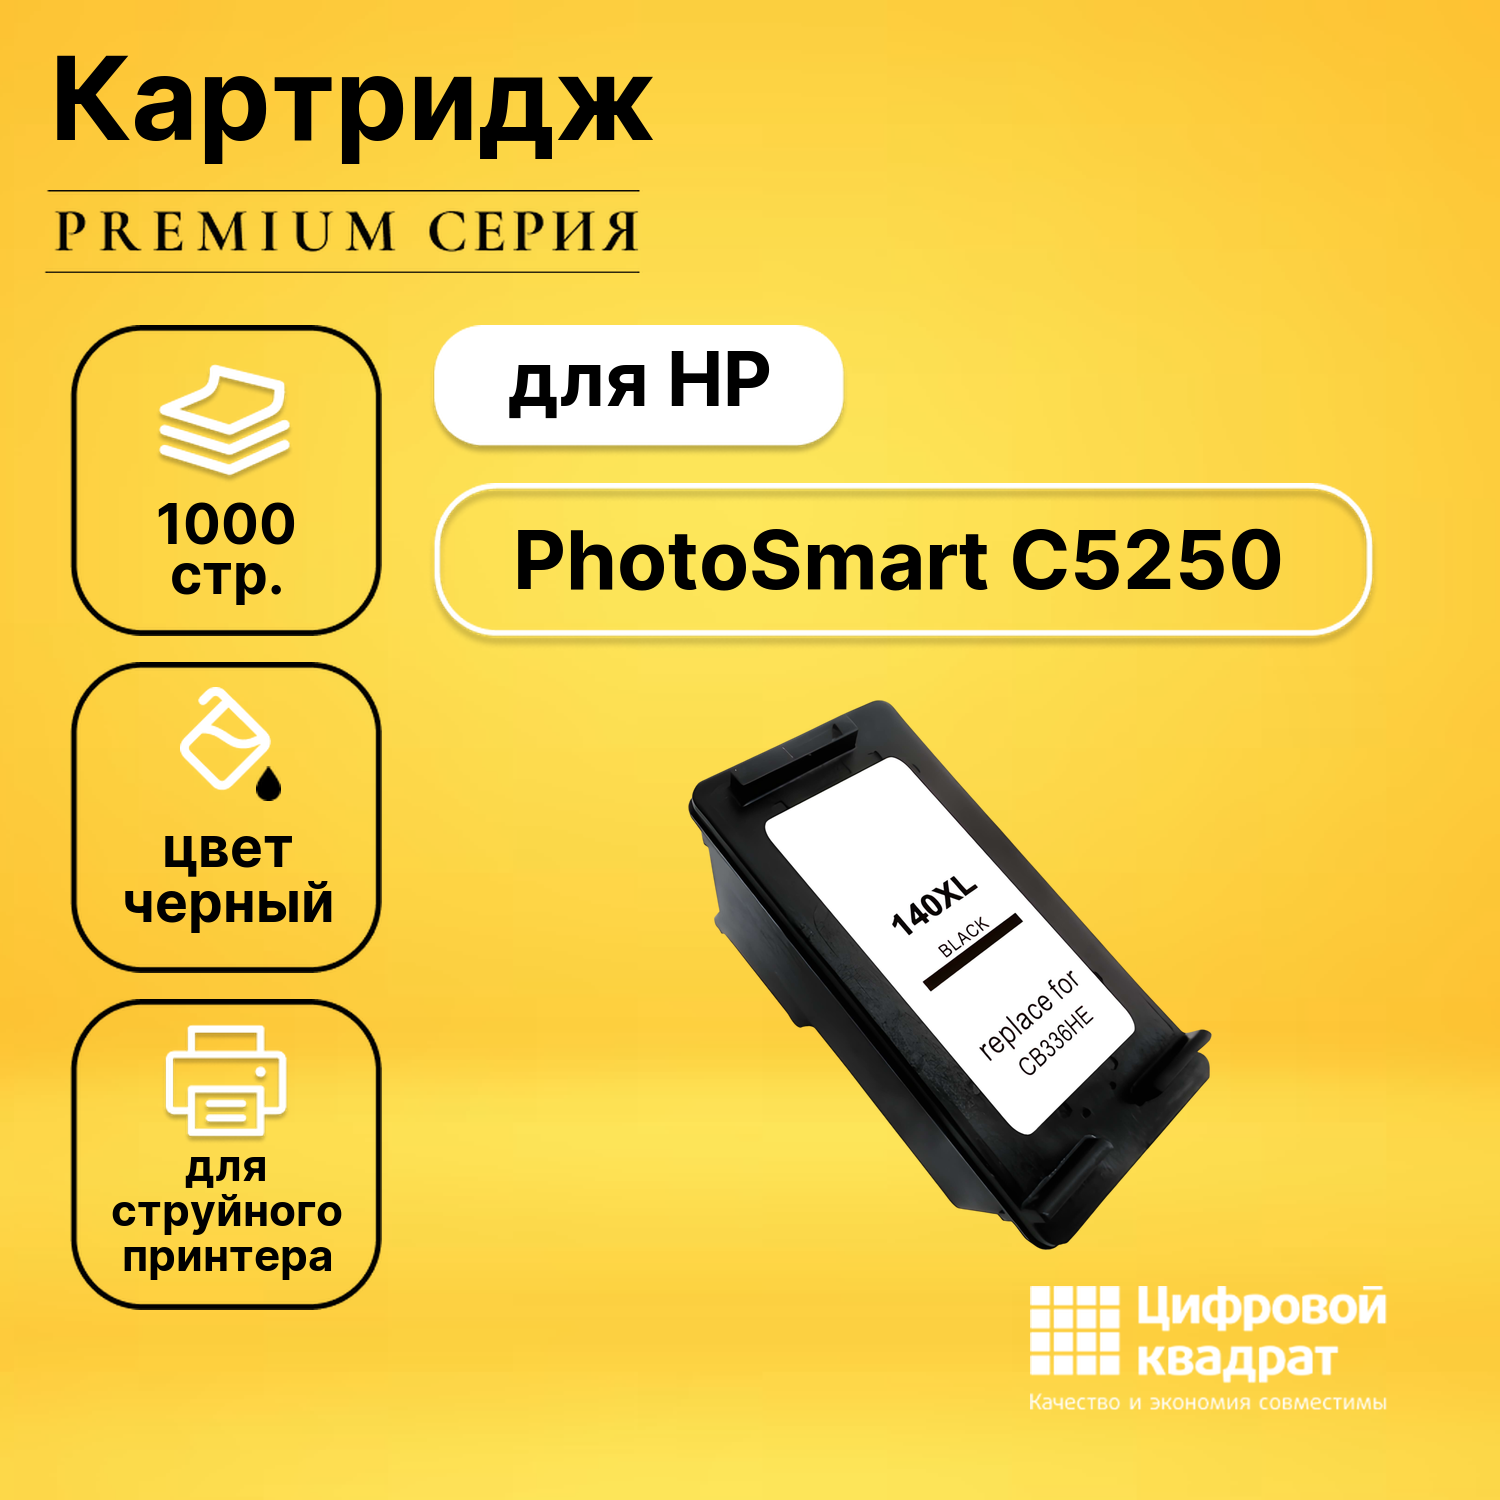 Картридж DS для HP PhotoSmart C5250 совместимый